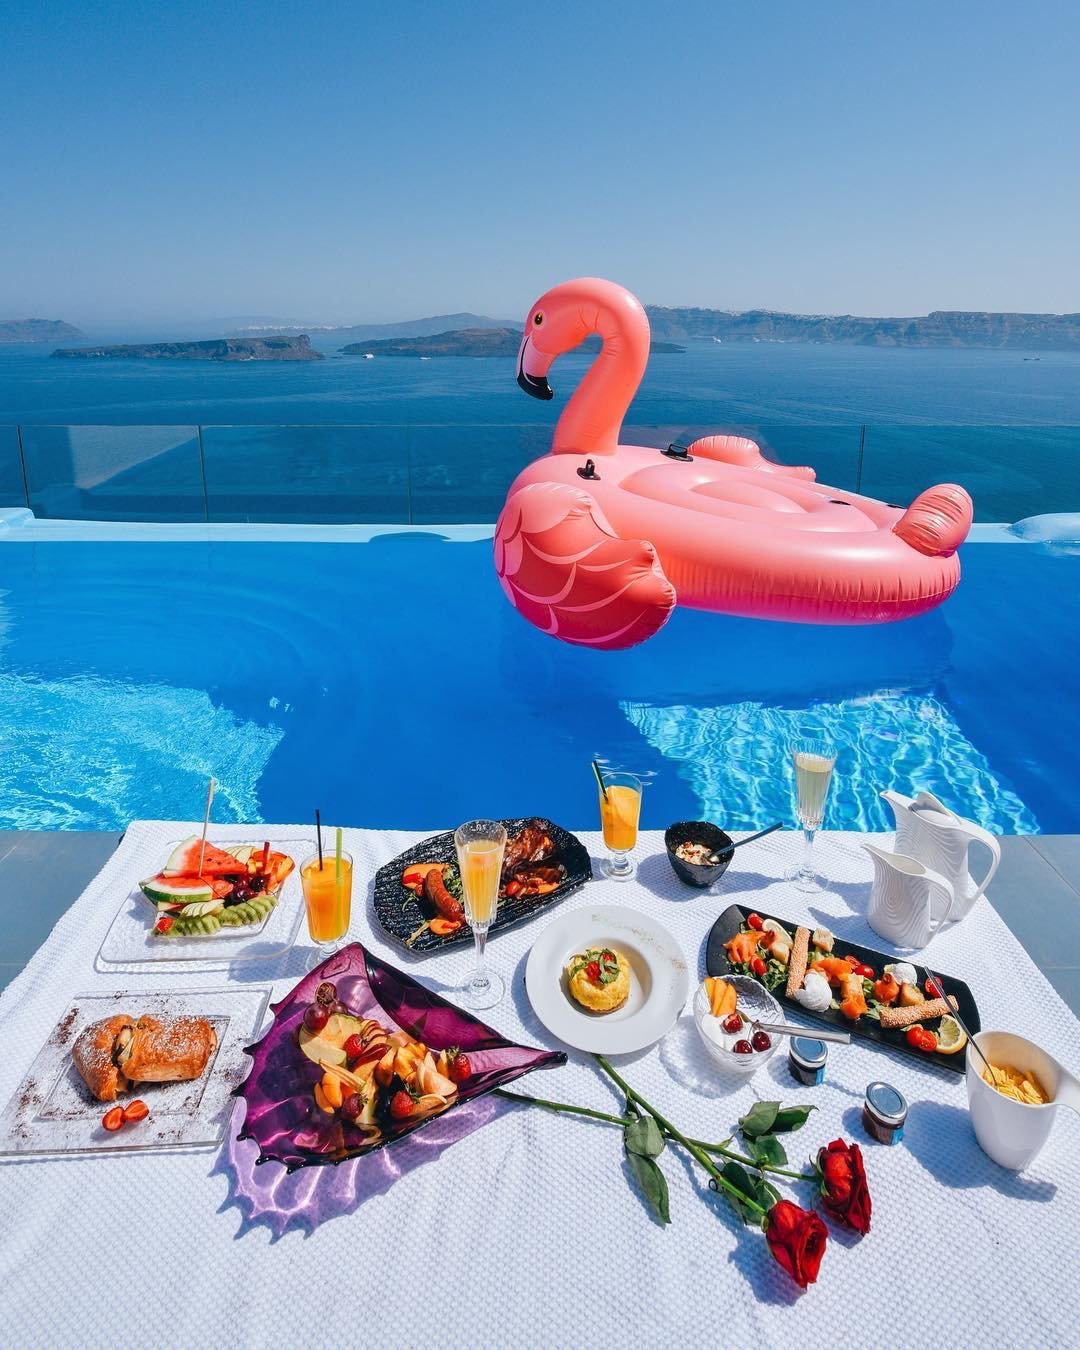 Breakfast poolside in Santorini island - Astarte Suites Luxury Hotel flamingo.JPG